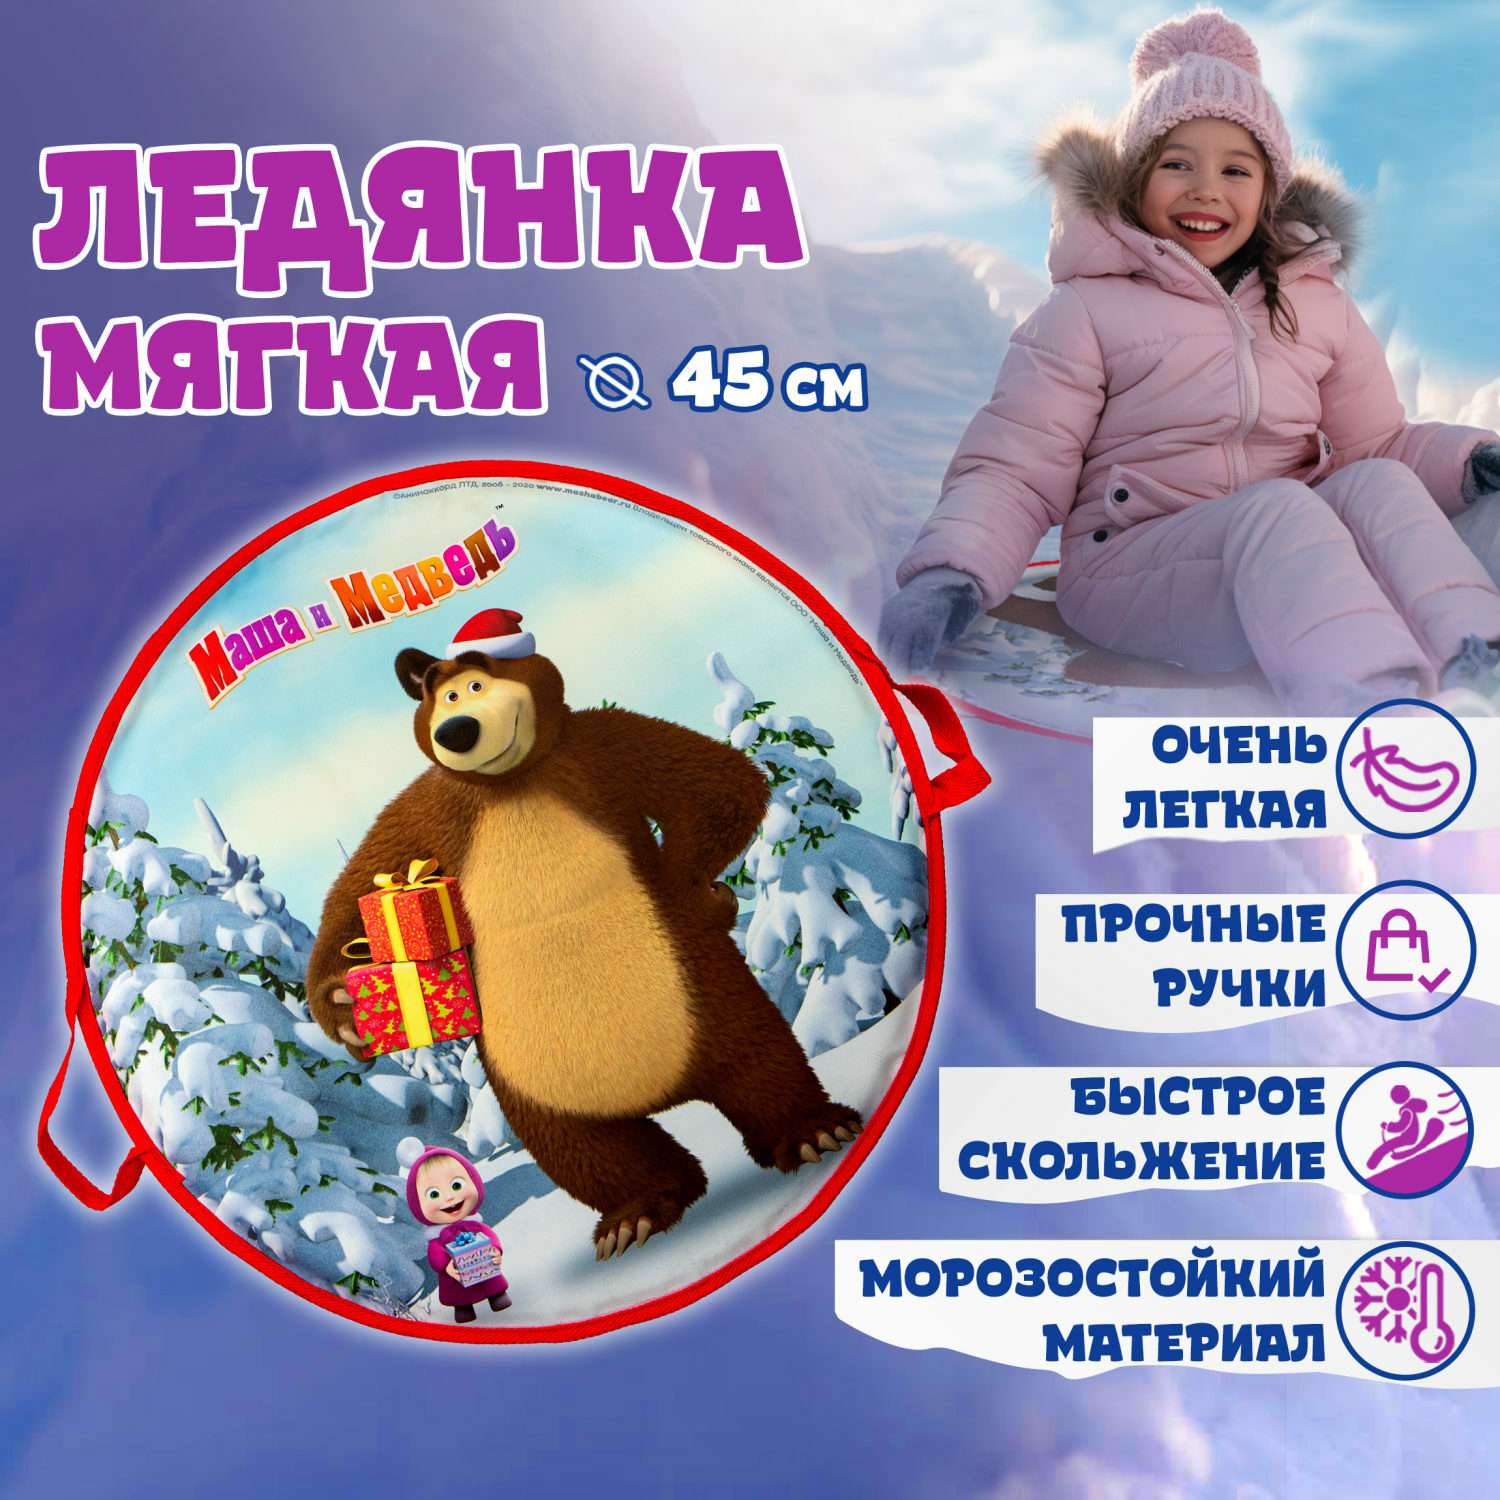 Ледянка мягкая Маша и медведь 1toy 45 см круглая - фото 5